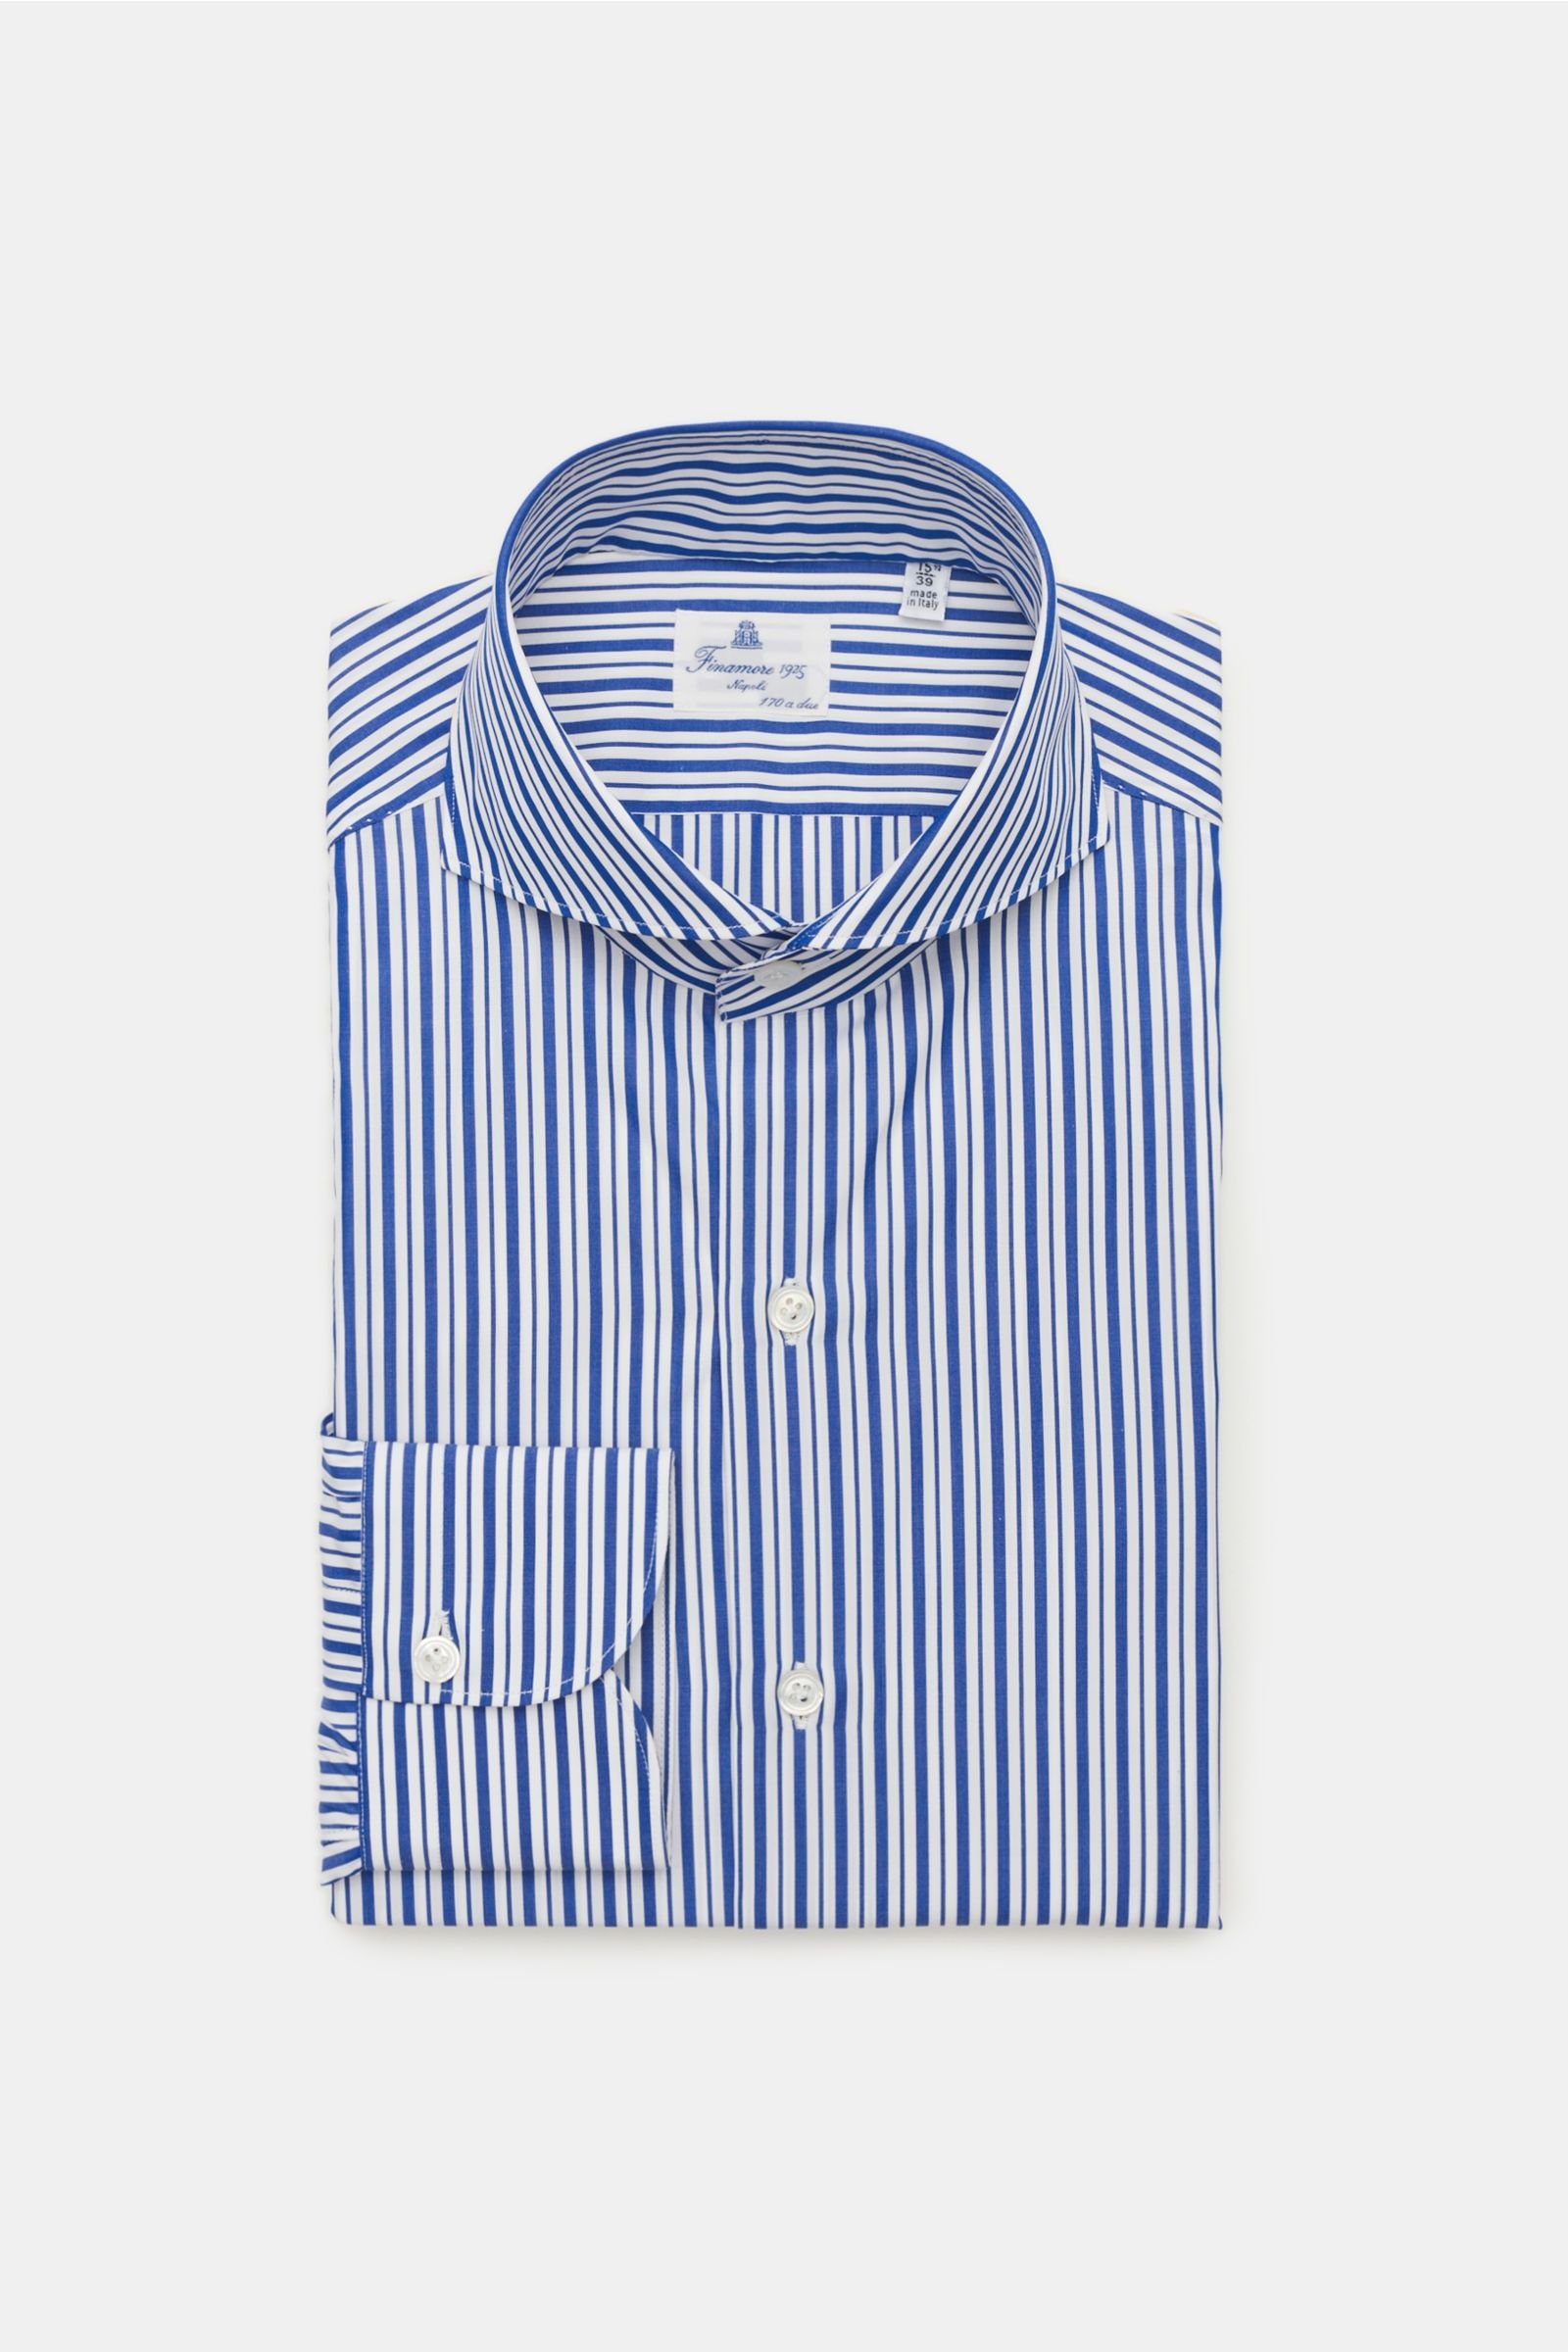 Business shirt 'Sergio Milano' shark collar navy/white striped